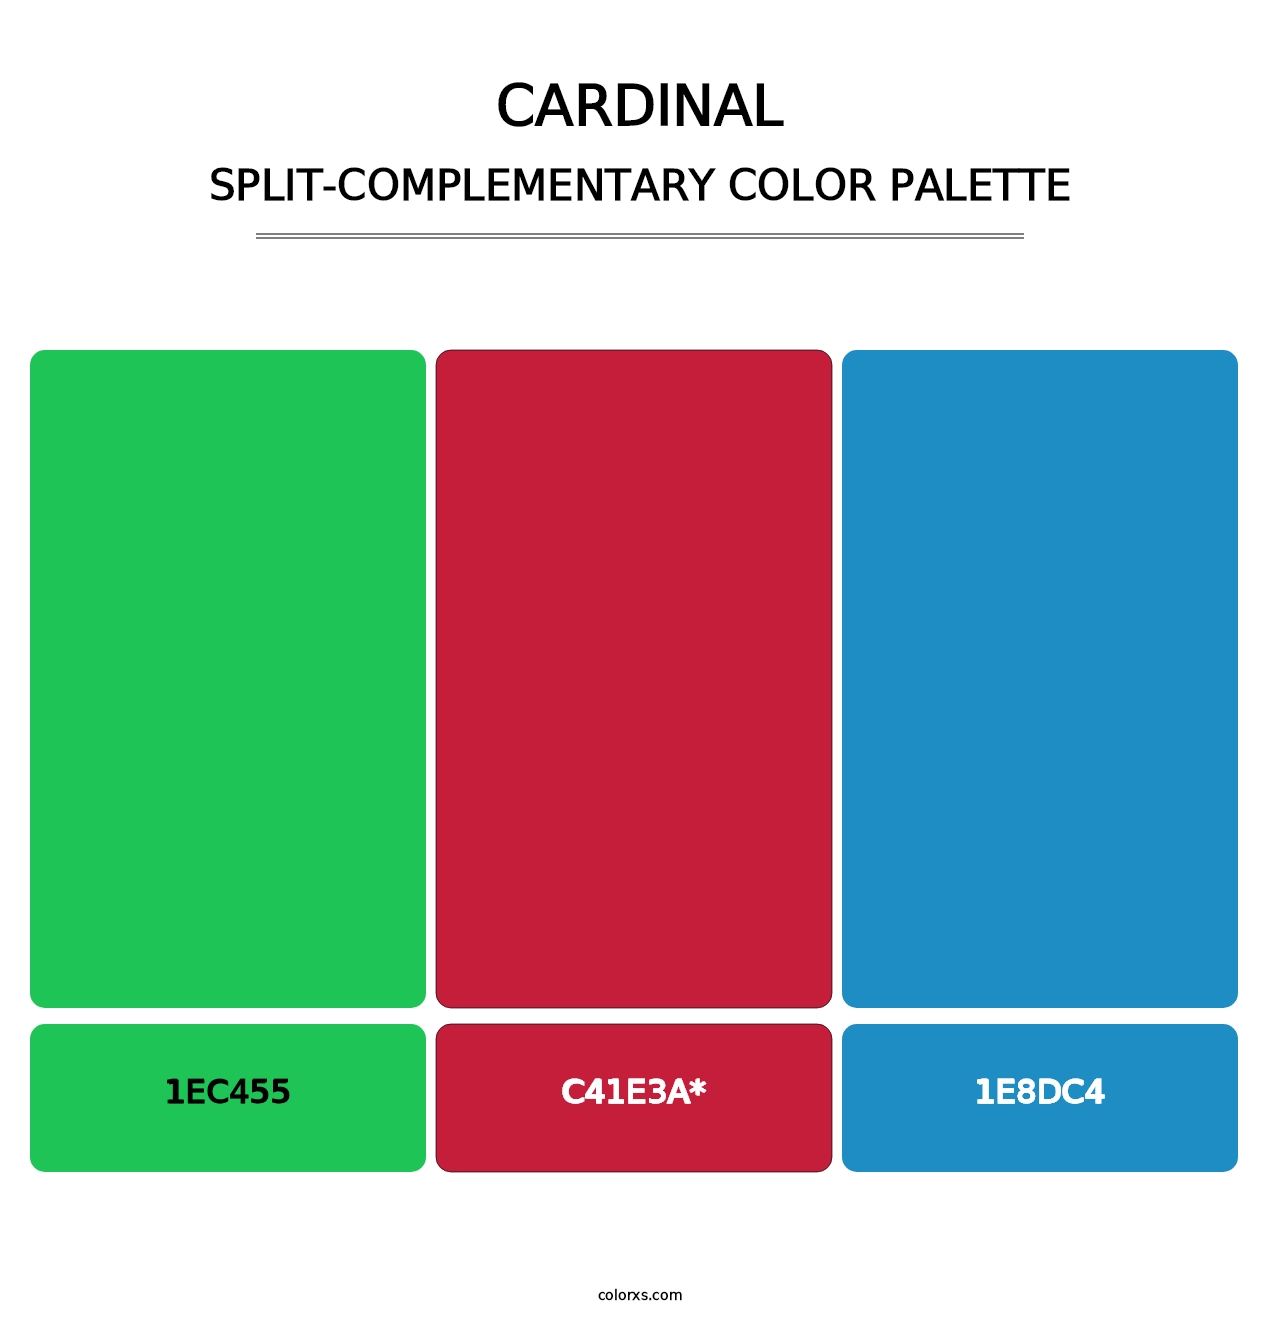 Cardinal - Split-Complementary Color Palette